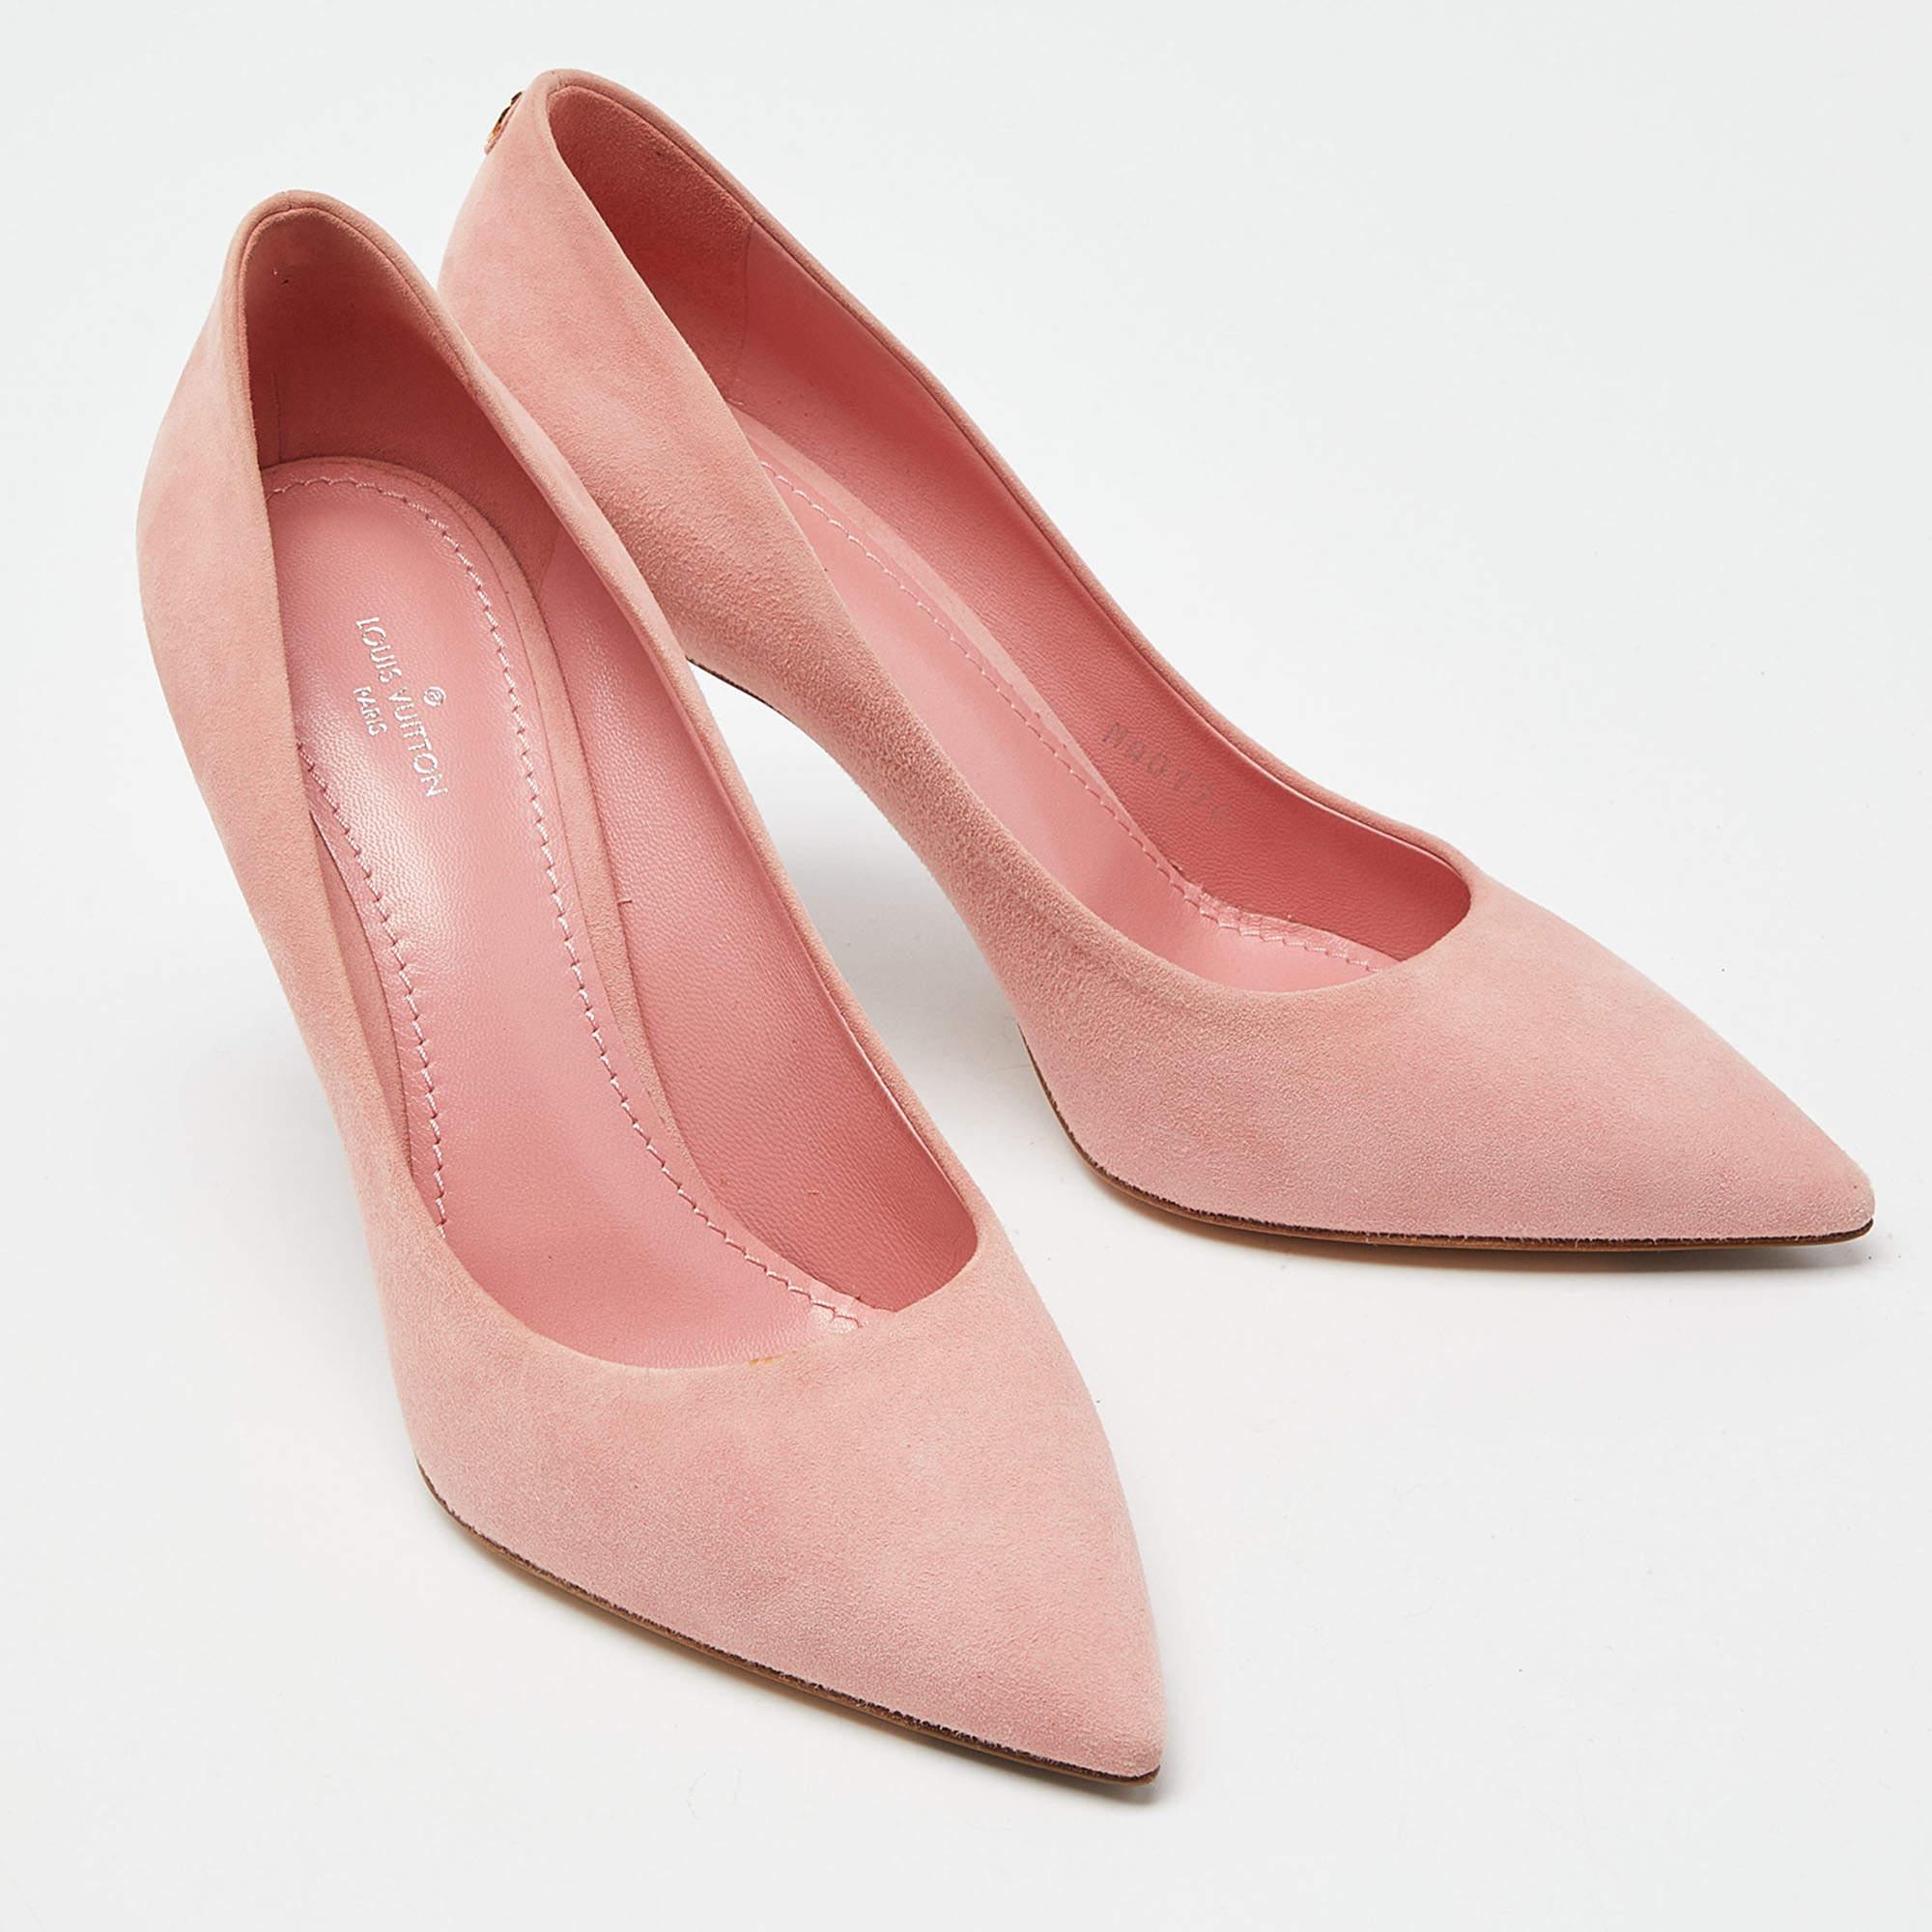 Louis Vuitton Pink Suede Pointed Toe Pumps Size 38.5 In Excellent Condition For Sale In Dubai, Al Qouz 2